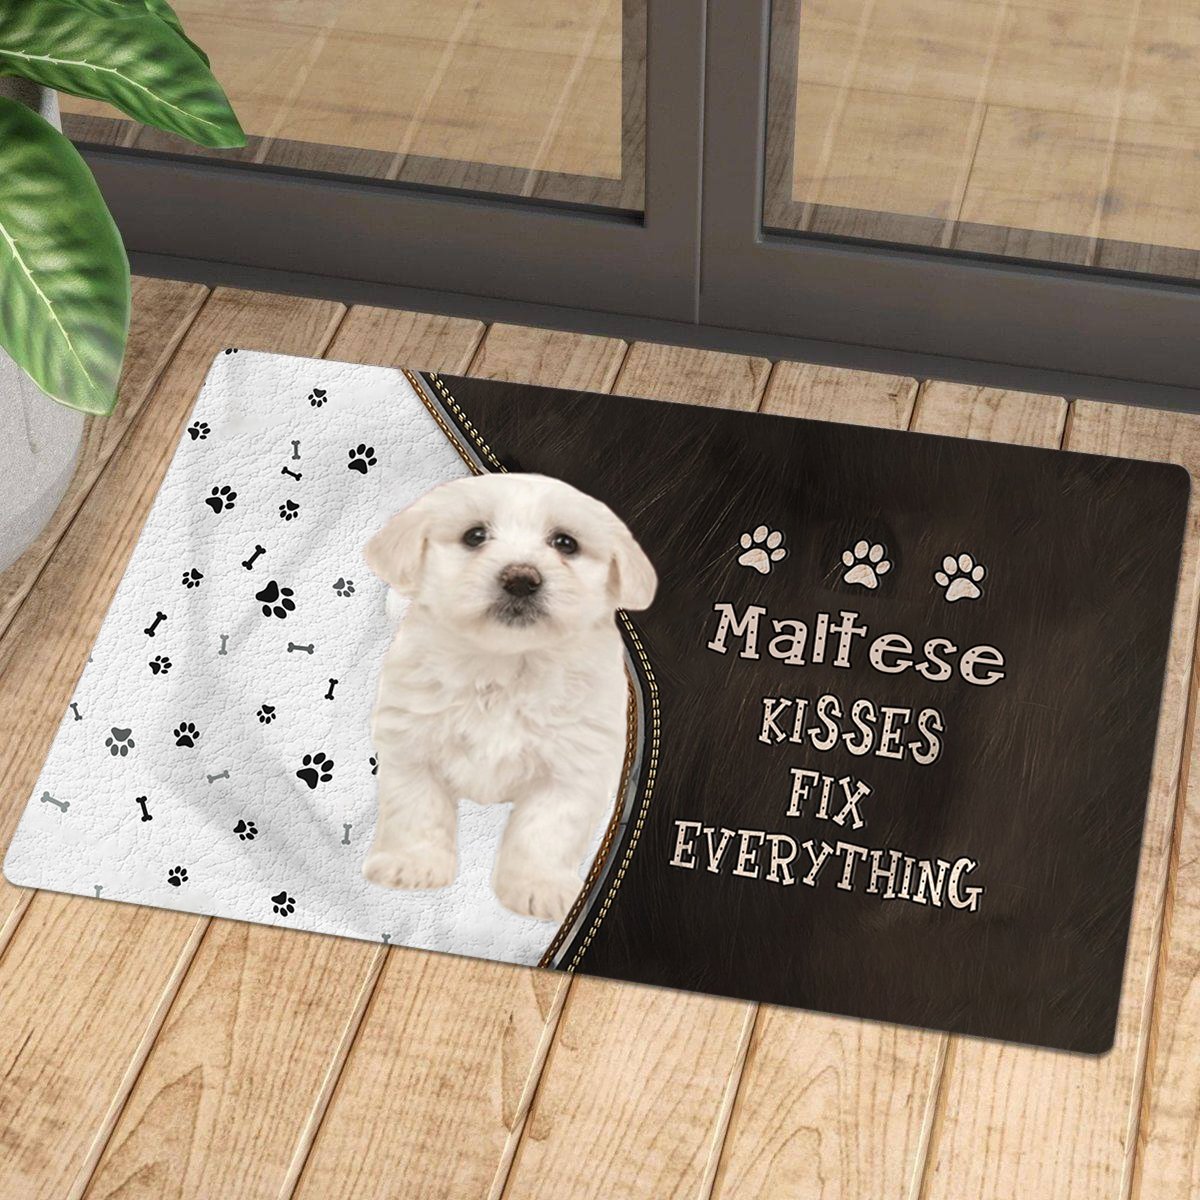 Maltese Kisses Fix Everything Doormat